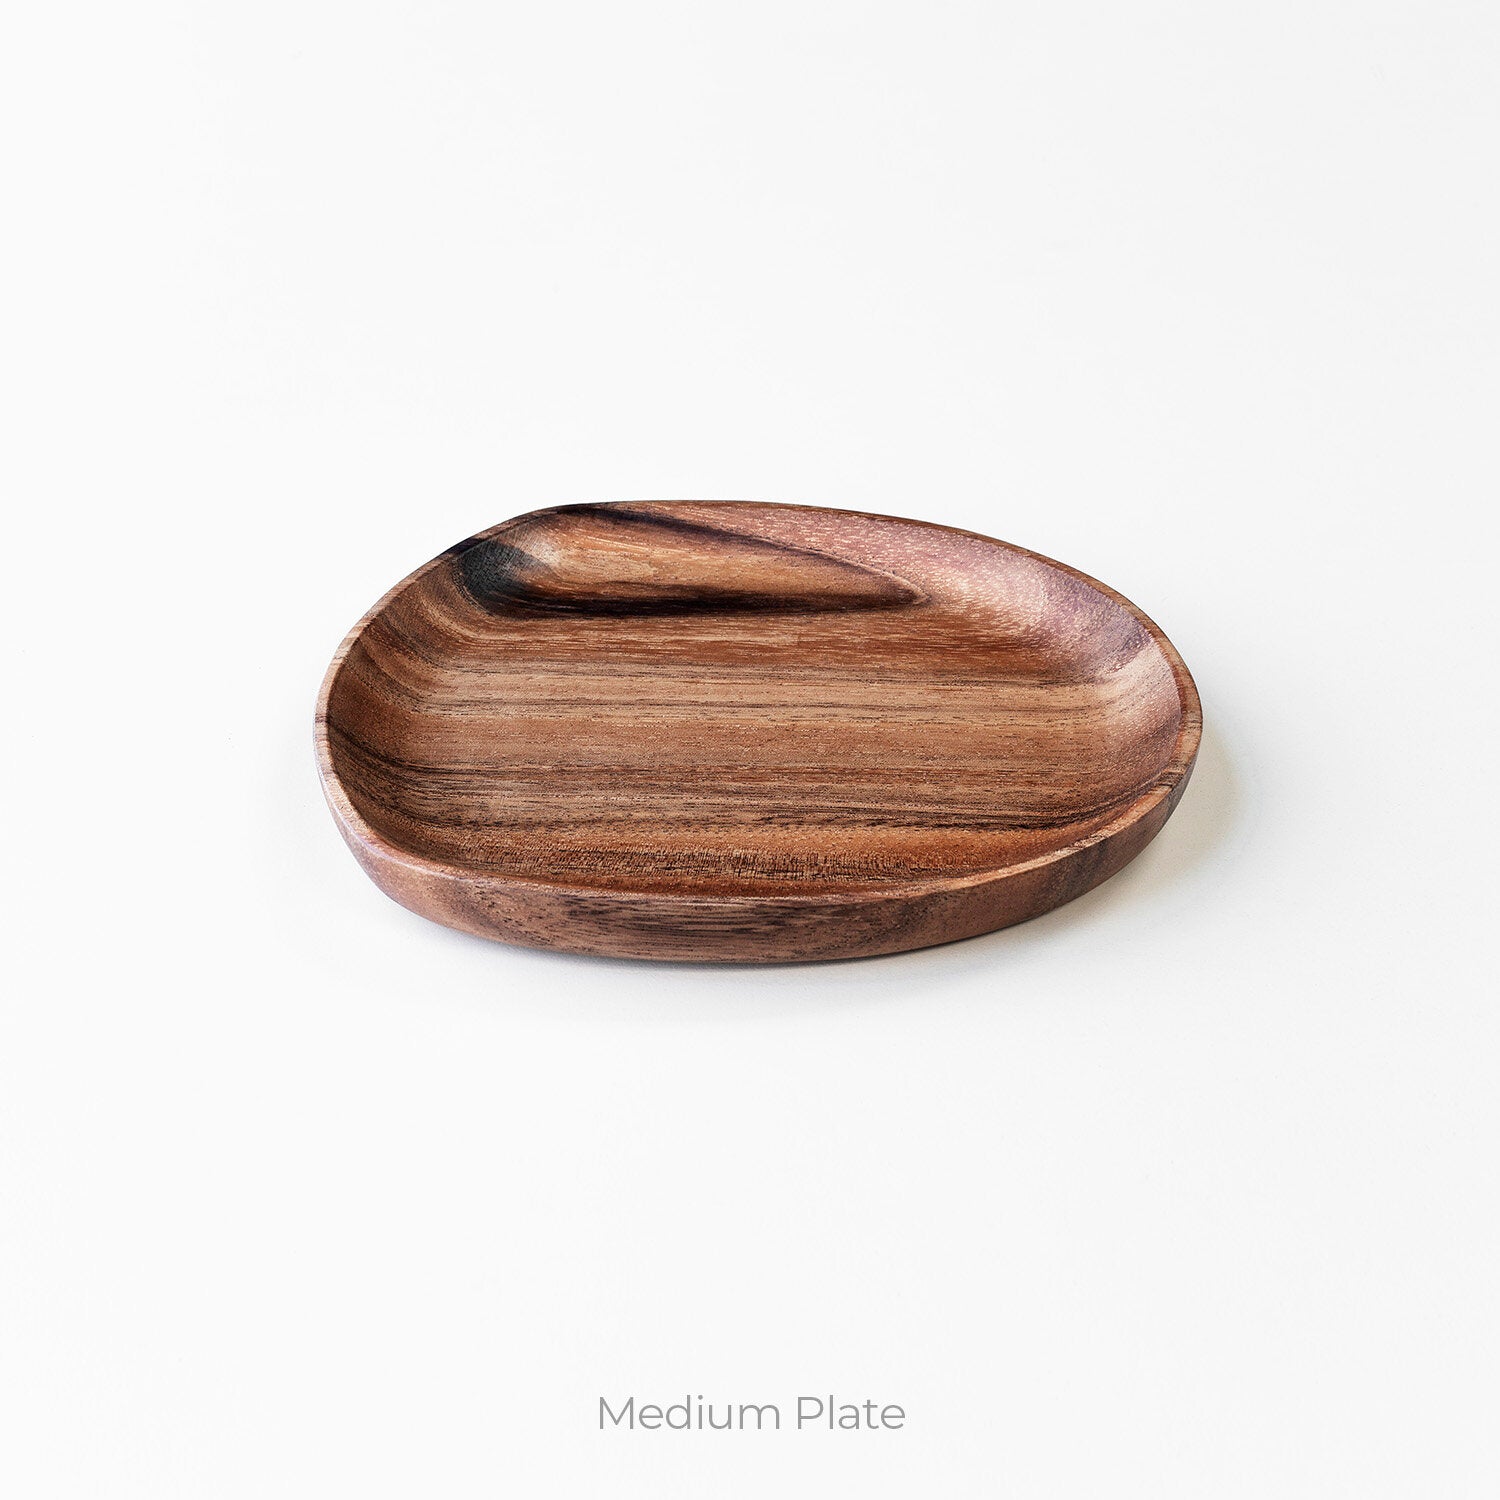 Medium wooden plate